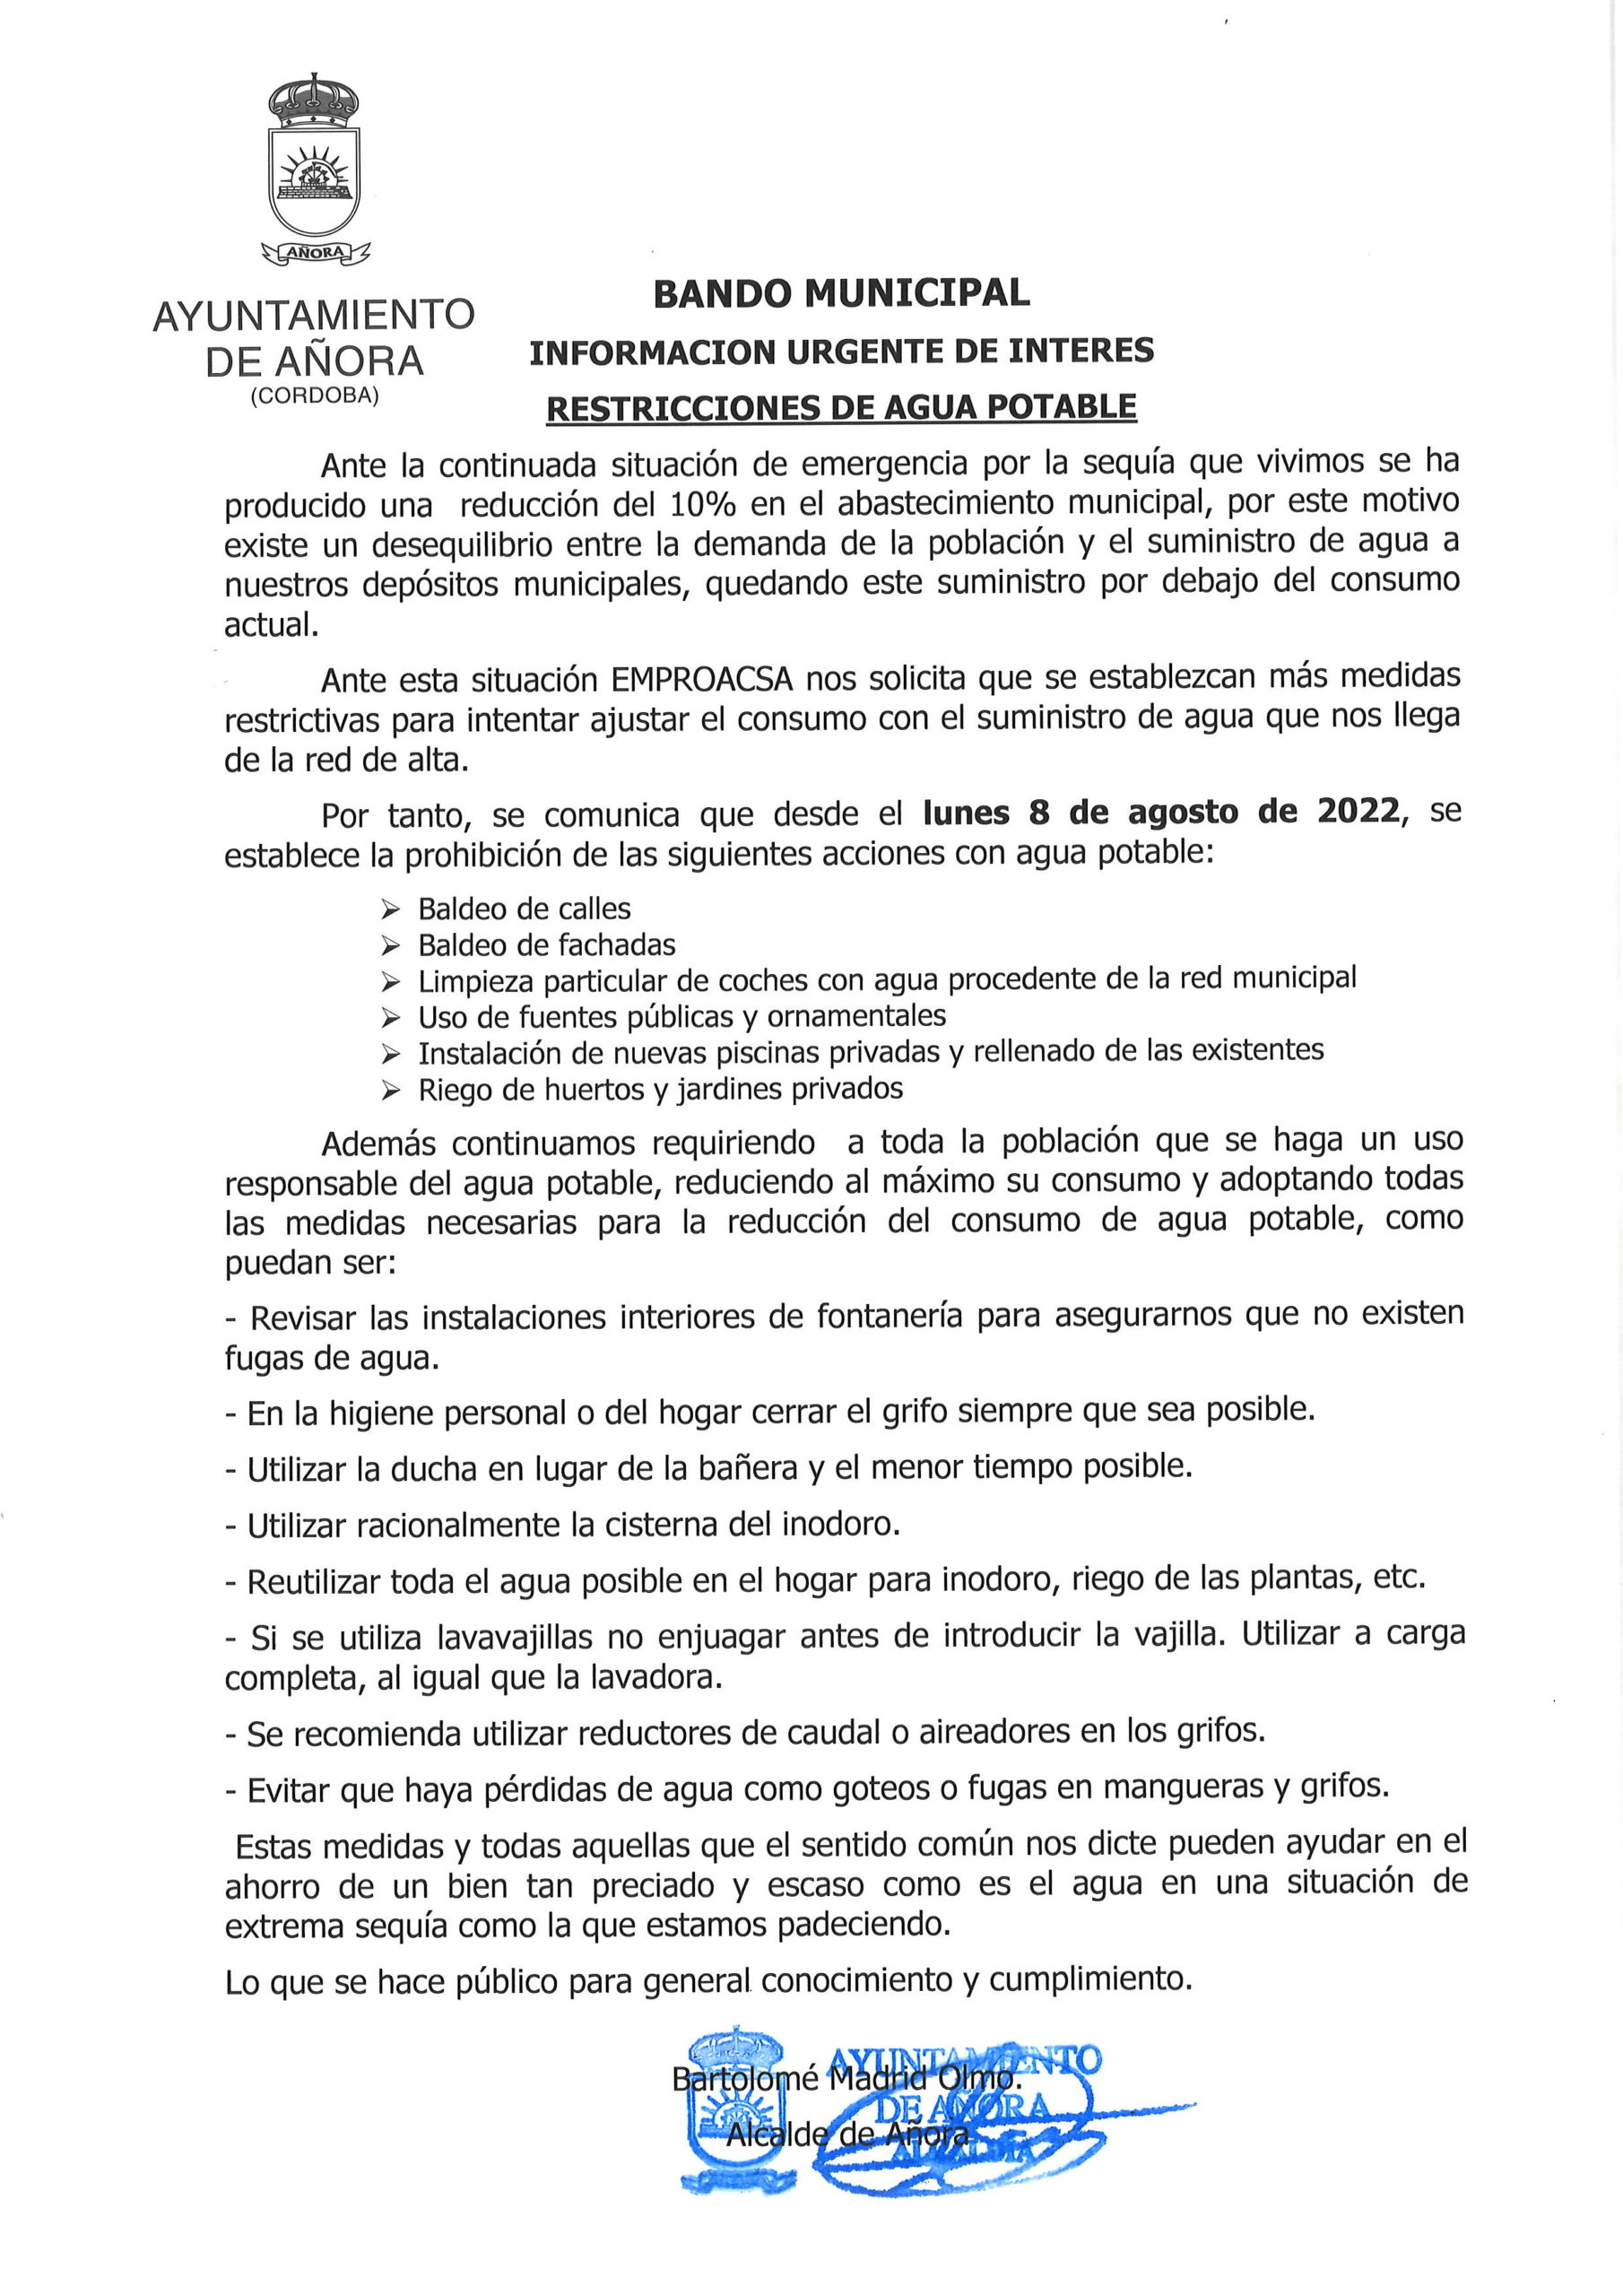 BANDO MUNICIPAL RESTRICCIONES DE AGUA POTABLE